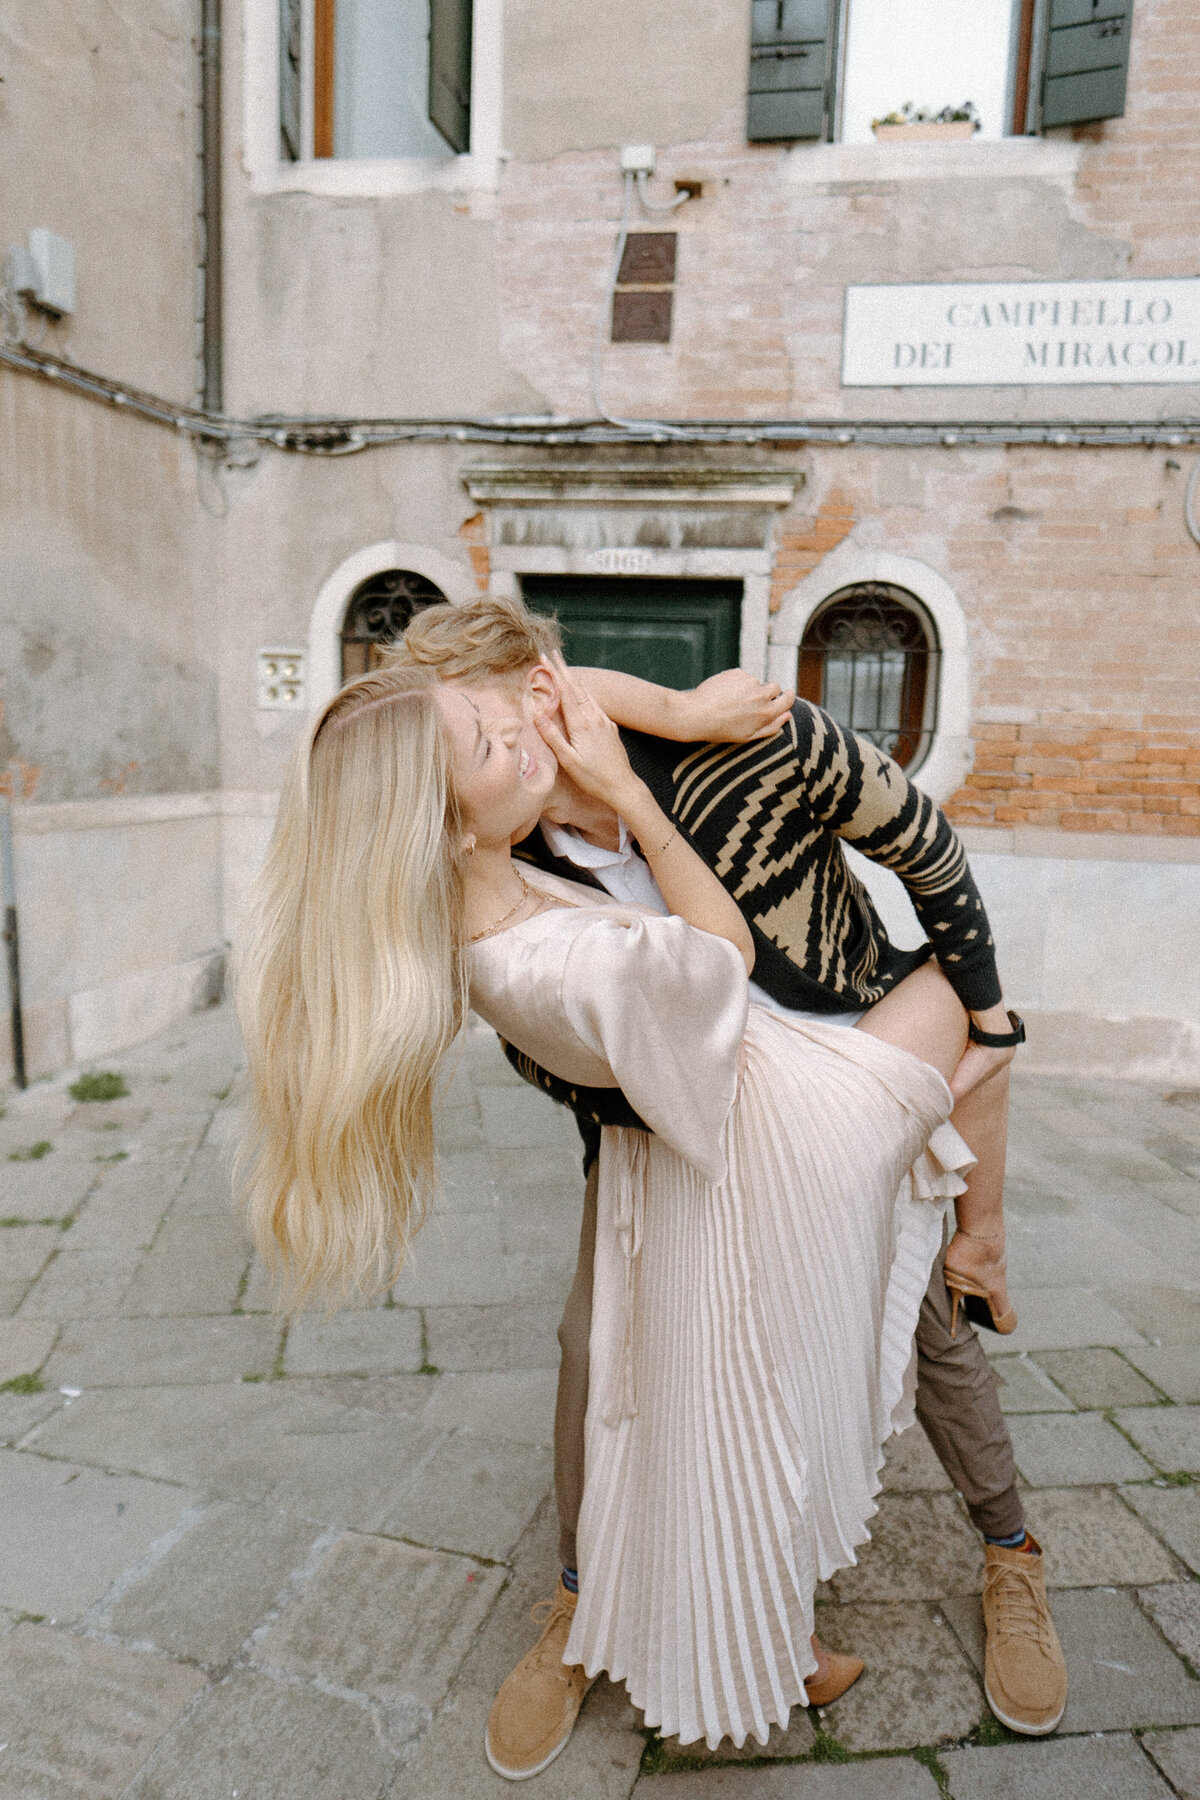 Documentary-Style-Editorial-Vogue-Italy-Destination-Wedding-Leah-Gunn-Photography-34